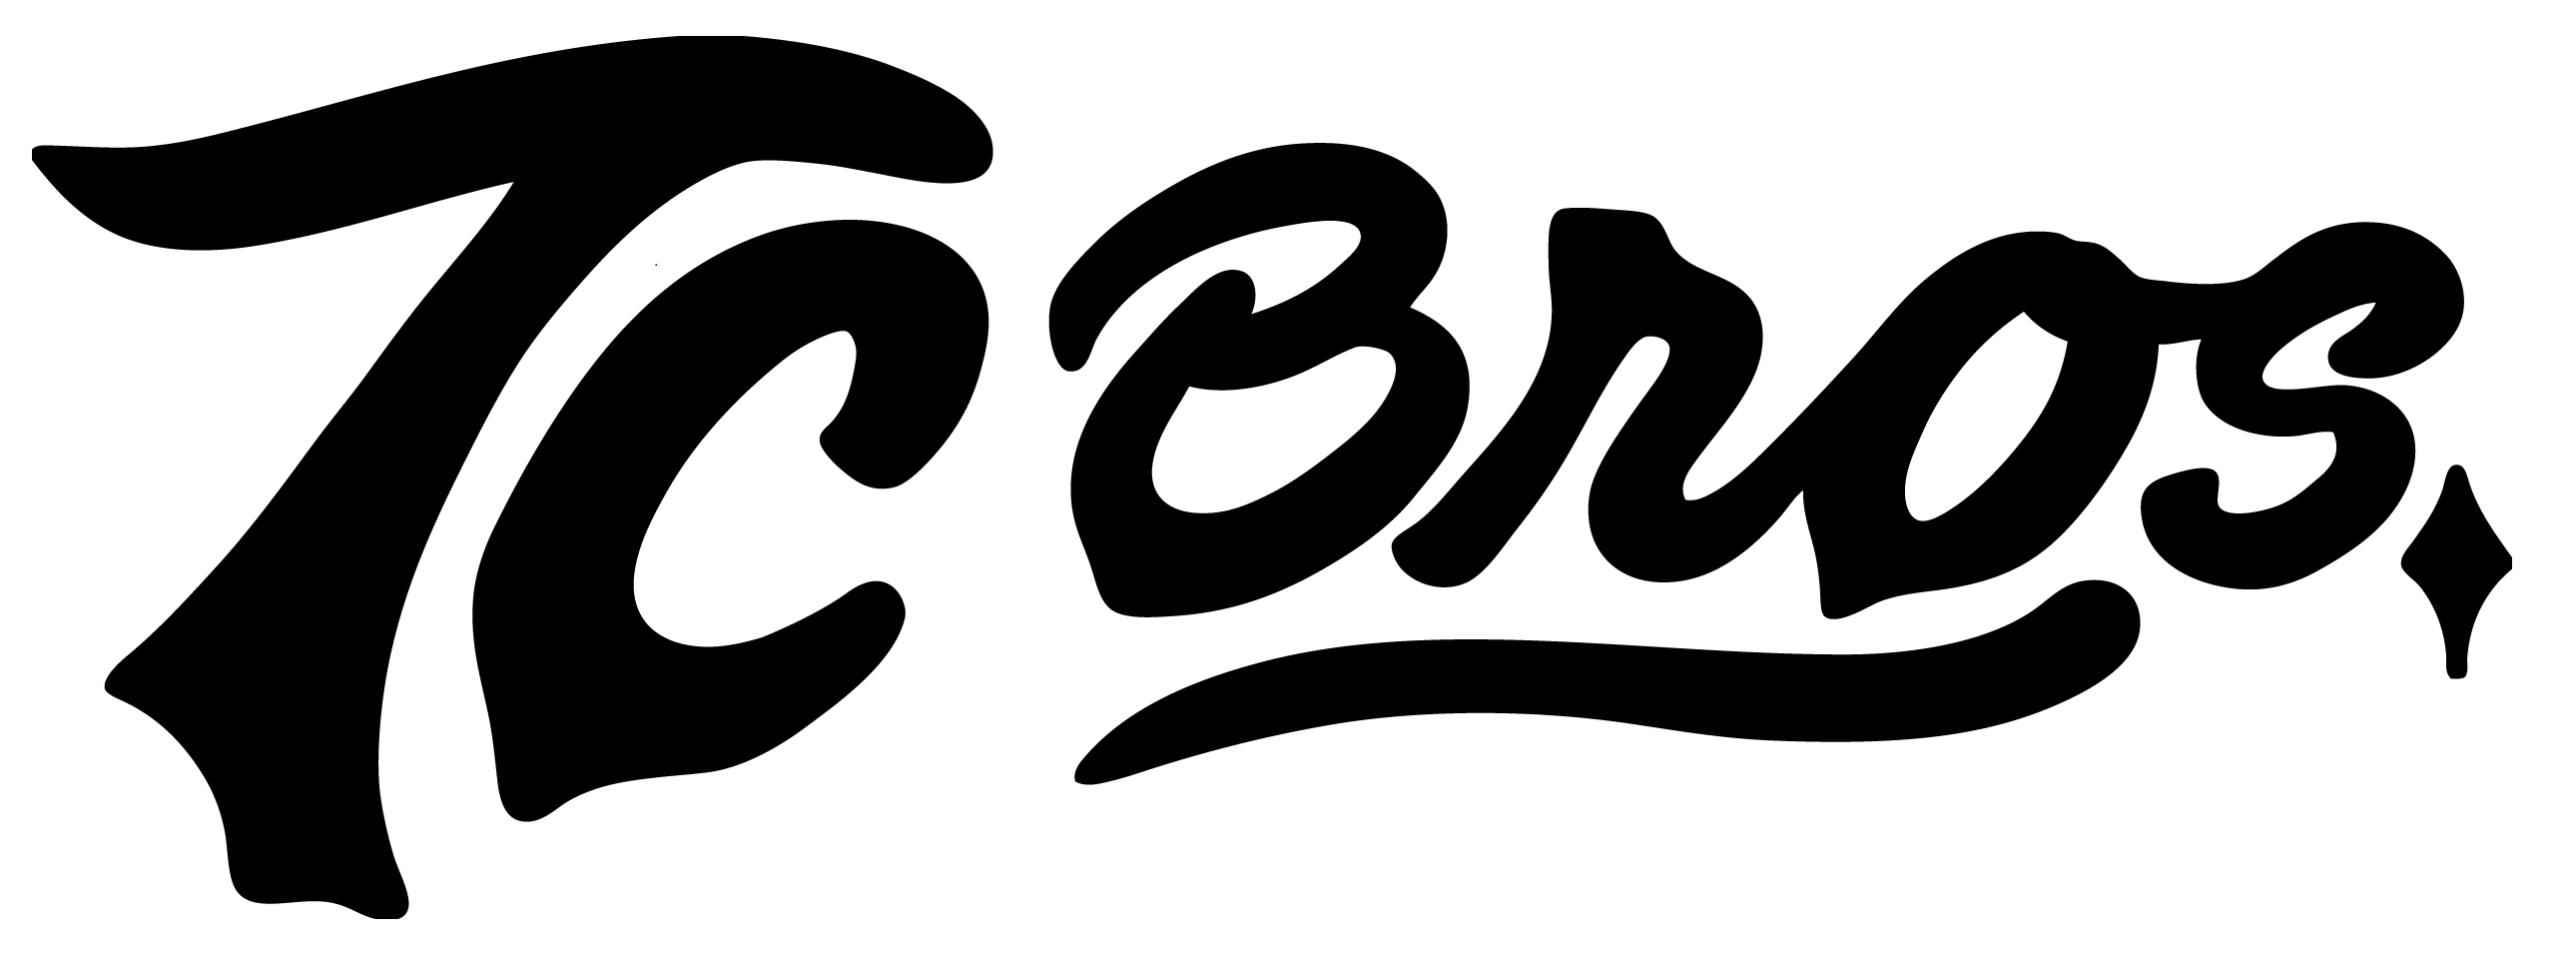 TC Bros. logo